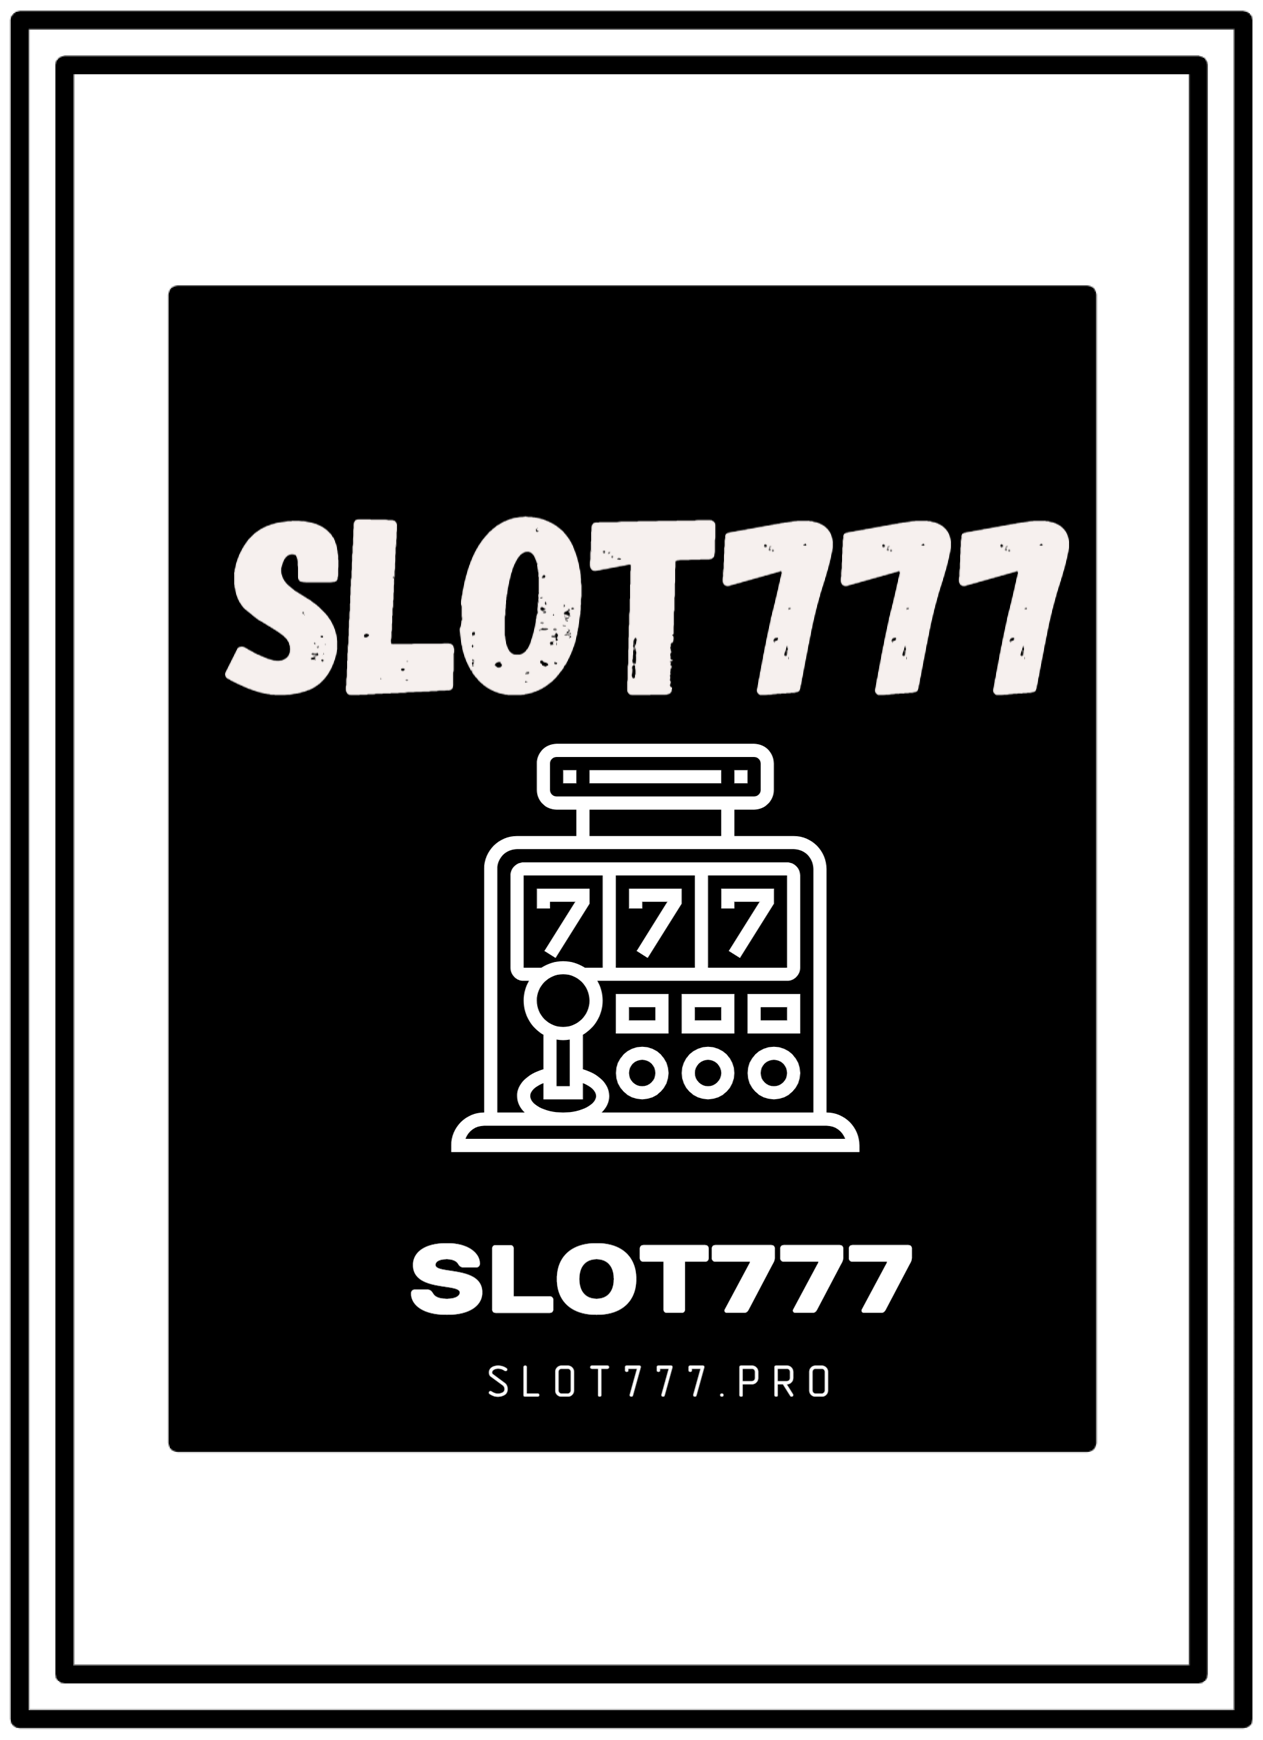 SLOT777 | SLOT77 | SLOT777.PRO